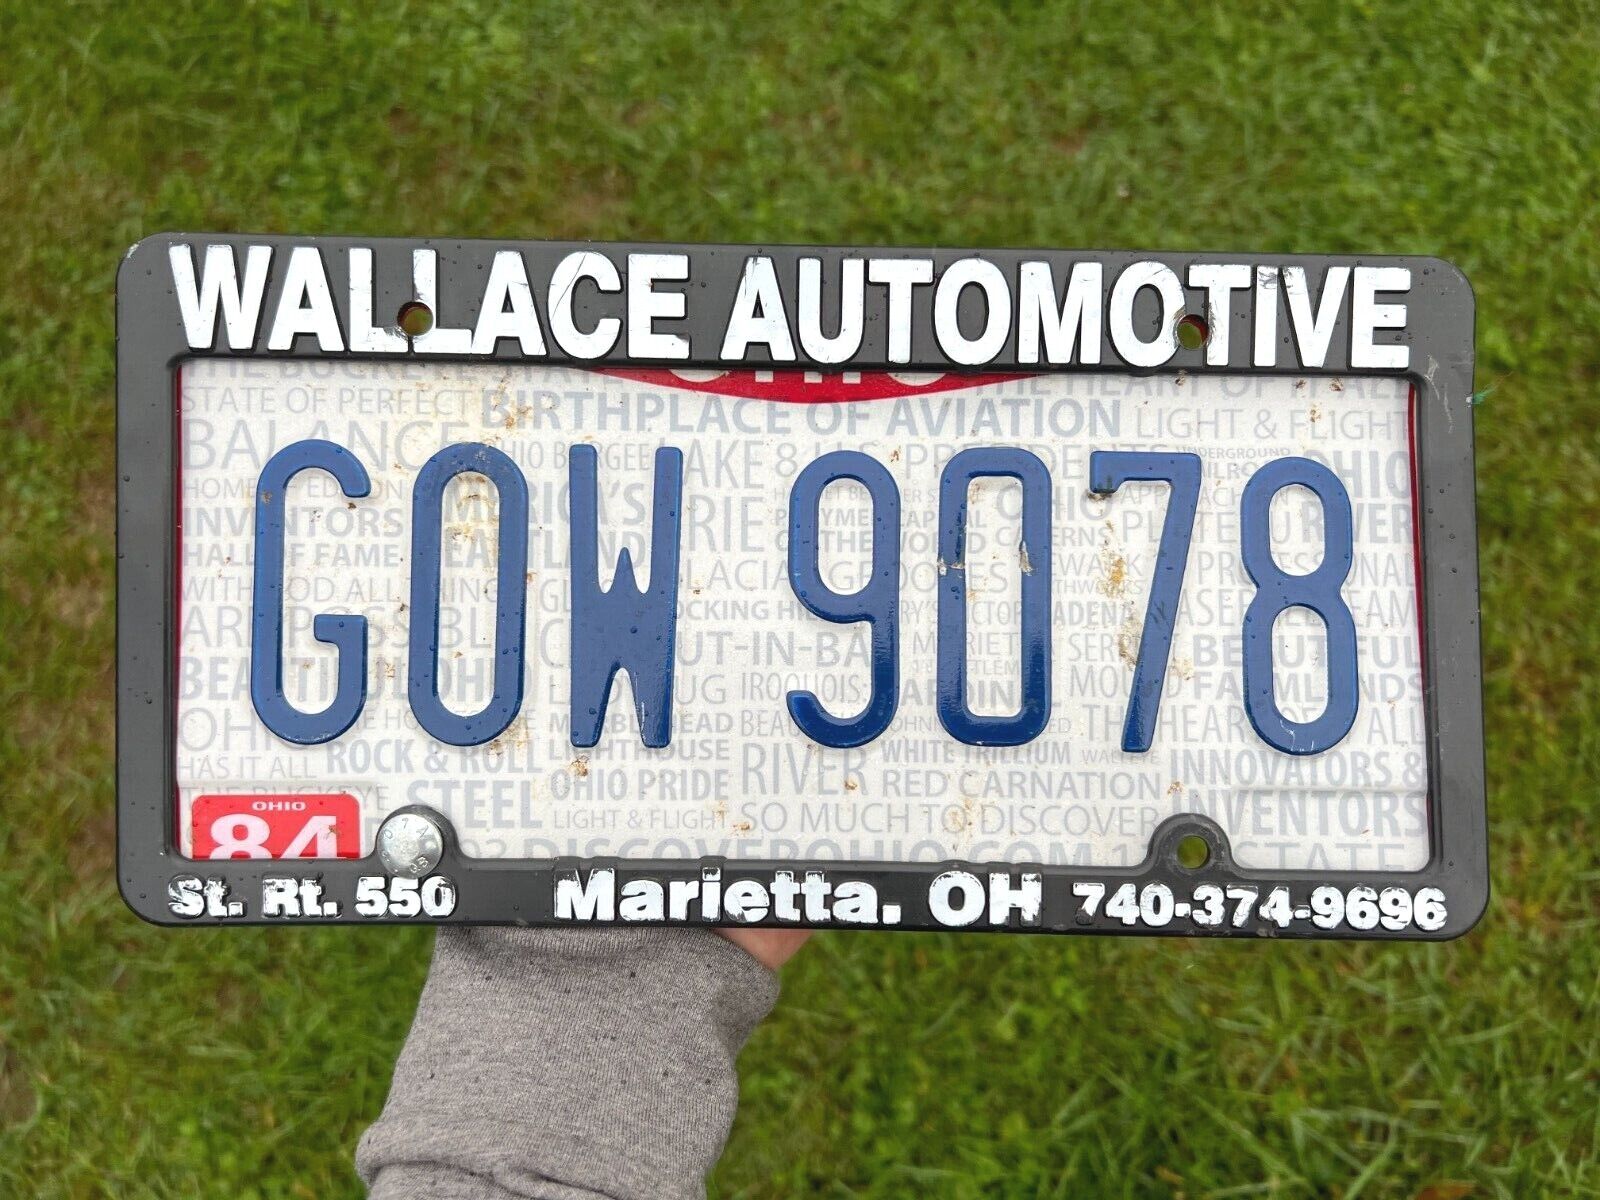 Ohio License Plate (1984) & Wallace Automotive Frame (mancave)